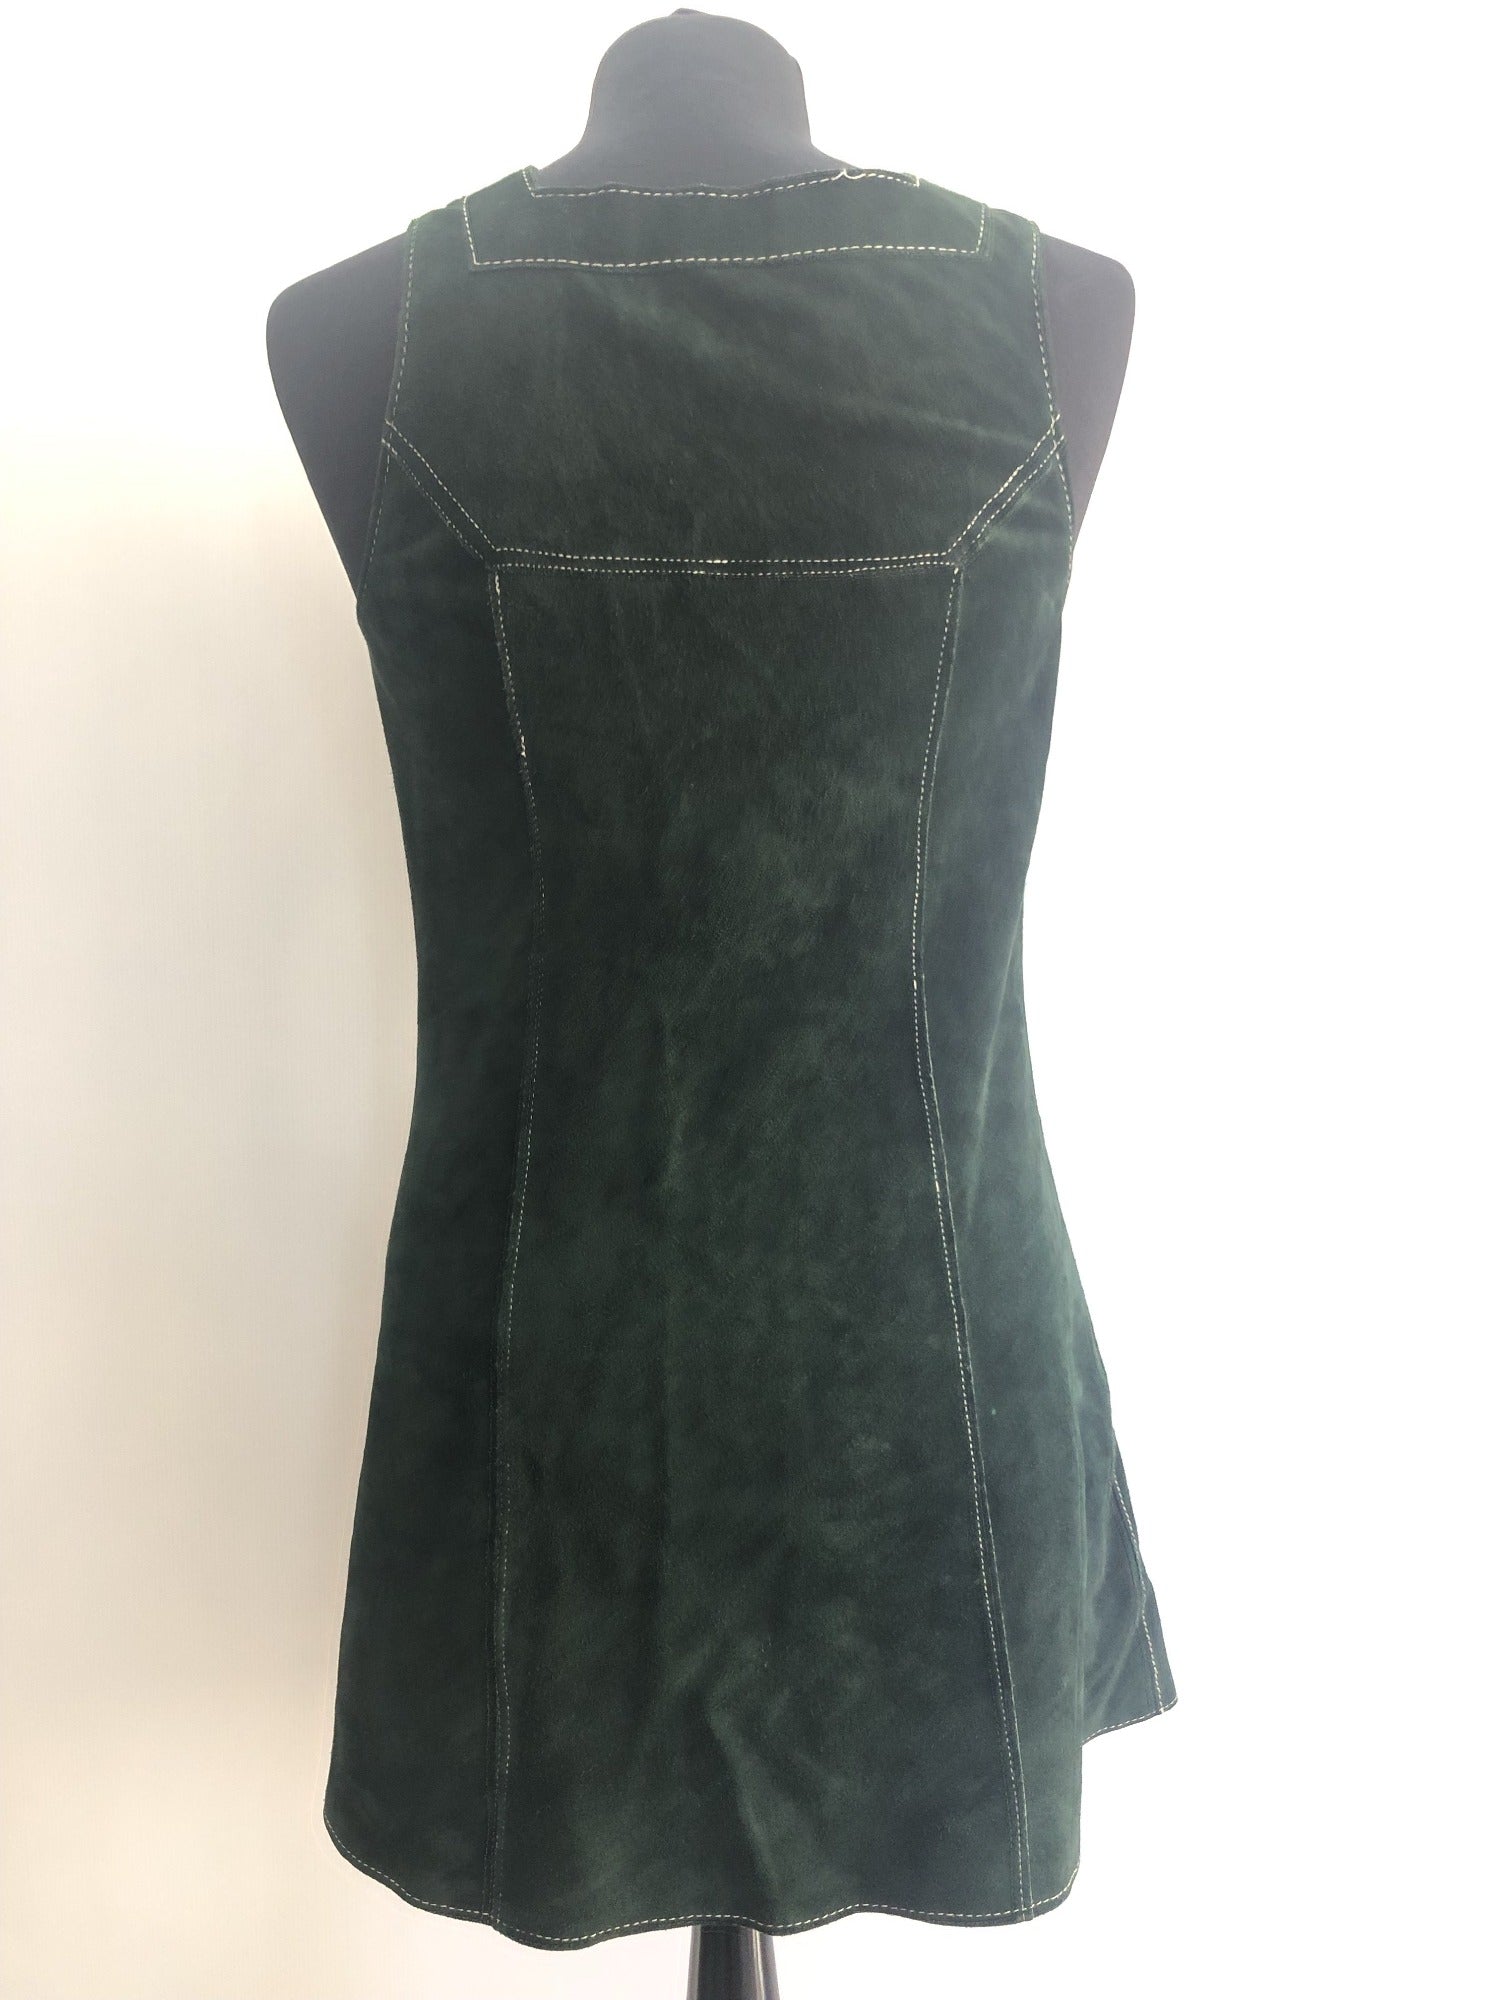 suede  sleeveless  press stud fastening  press stud  mod  Green  dress  boho  8  60s  1970s  1960s